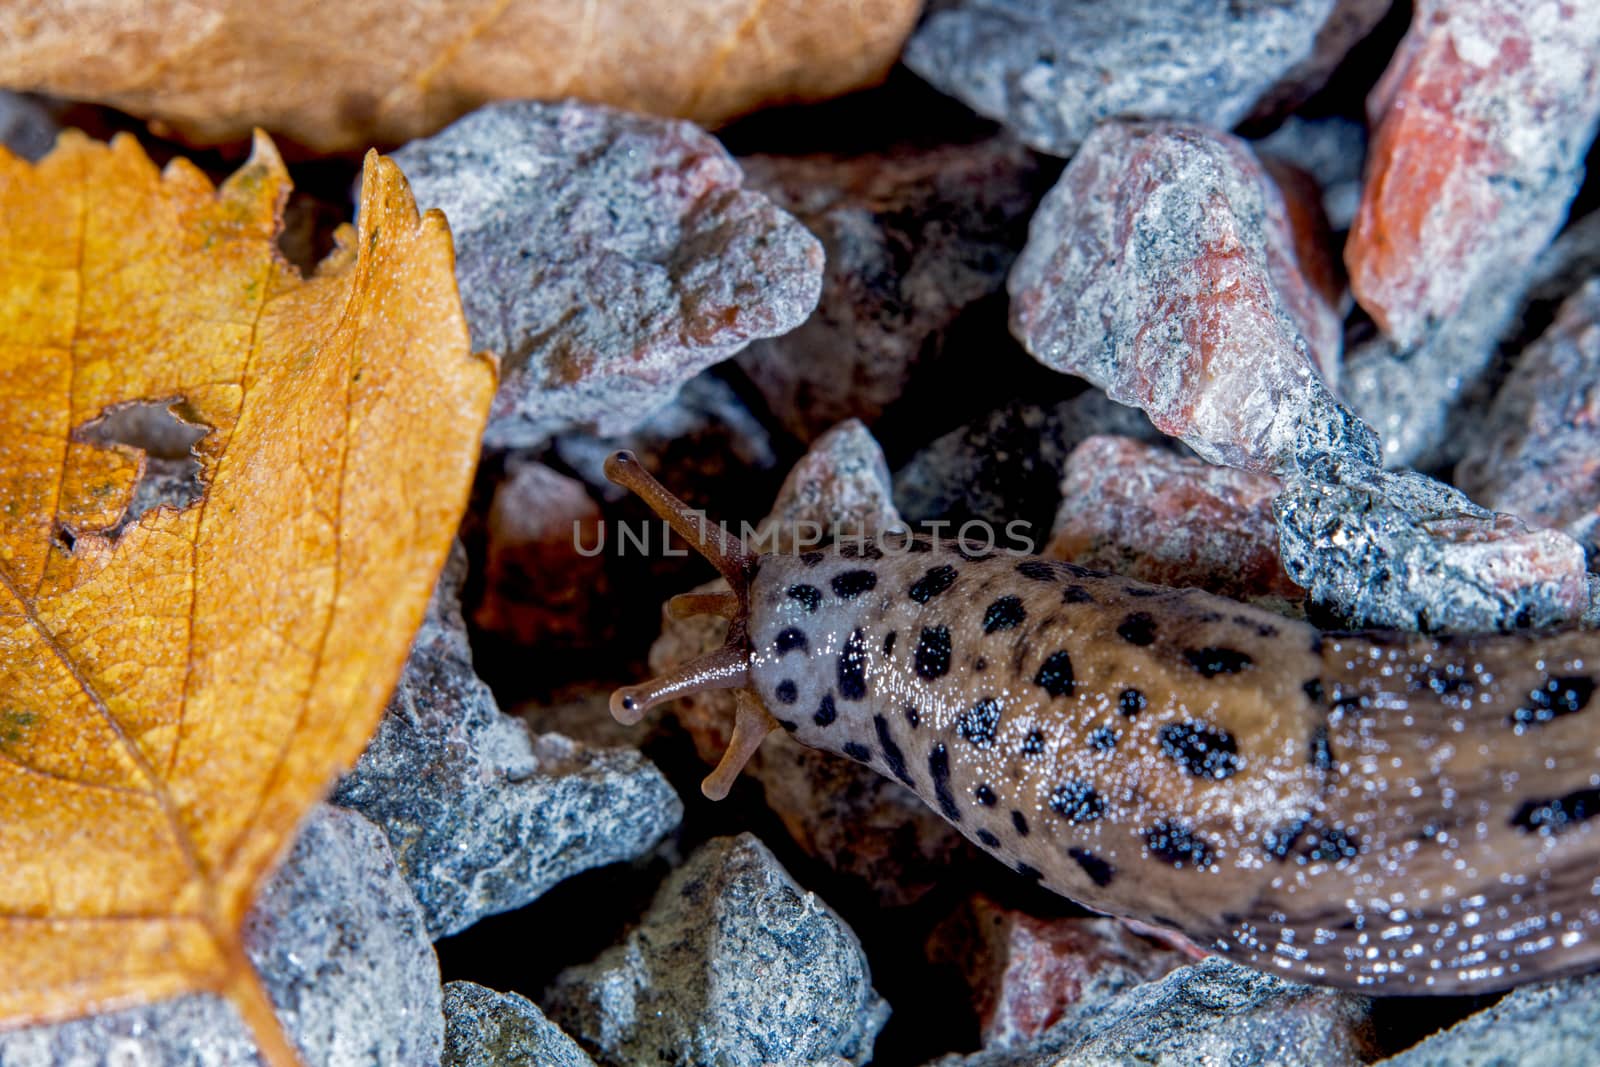 leopard slug by thomas_males